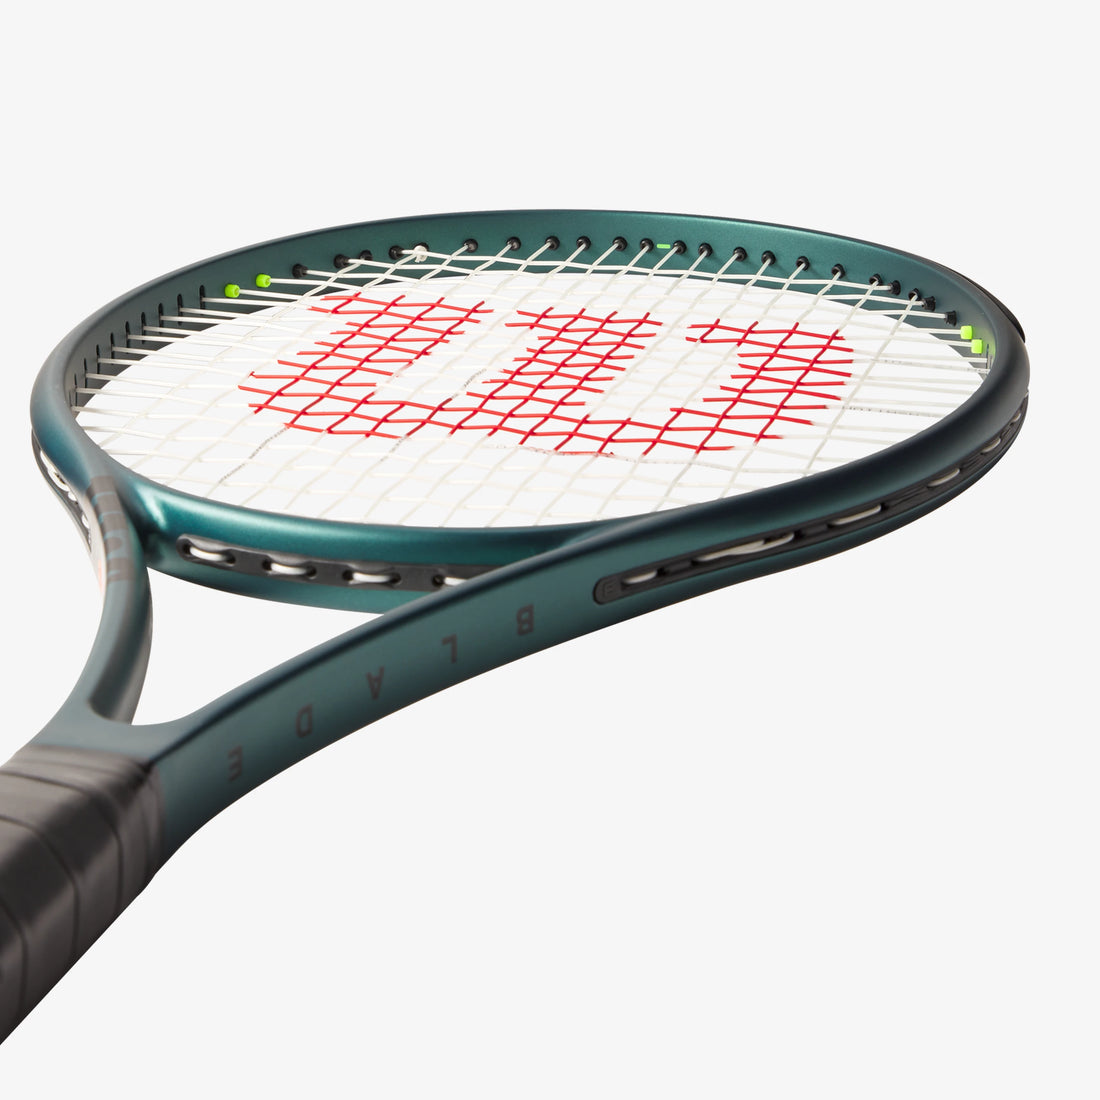 2024 Wilson BLADE 104 V9 Tennis Racket